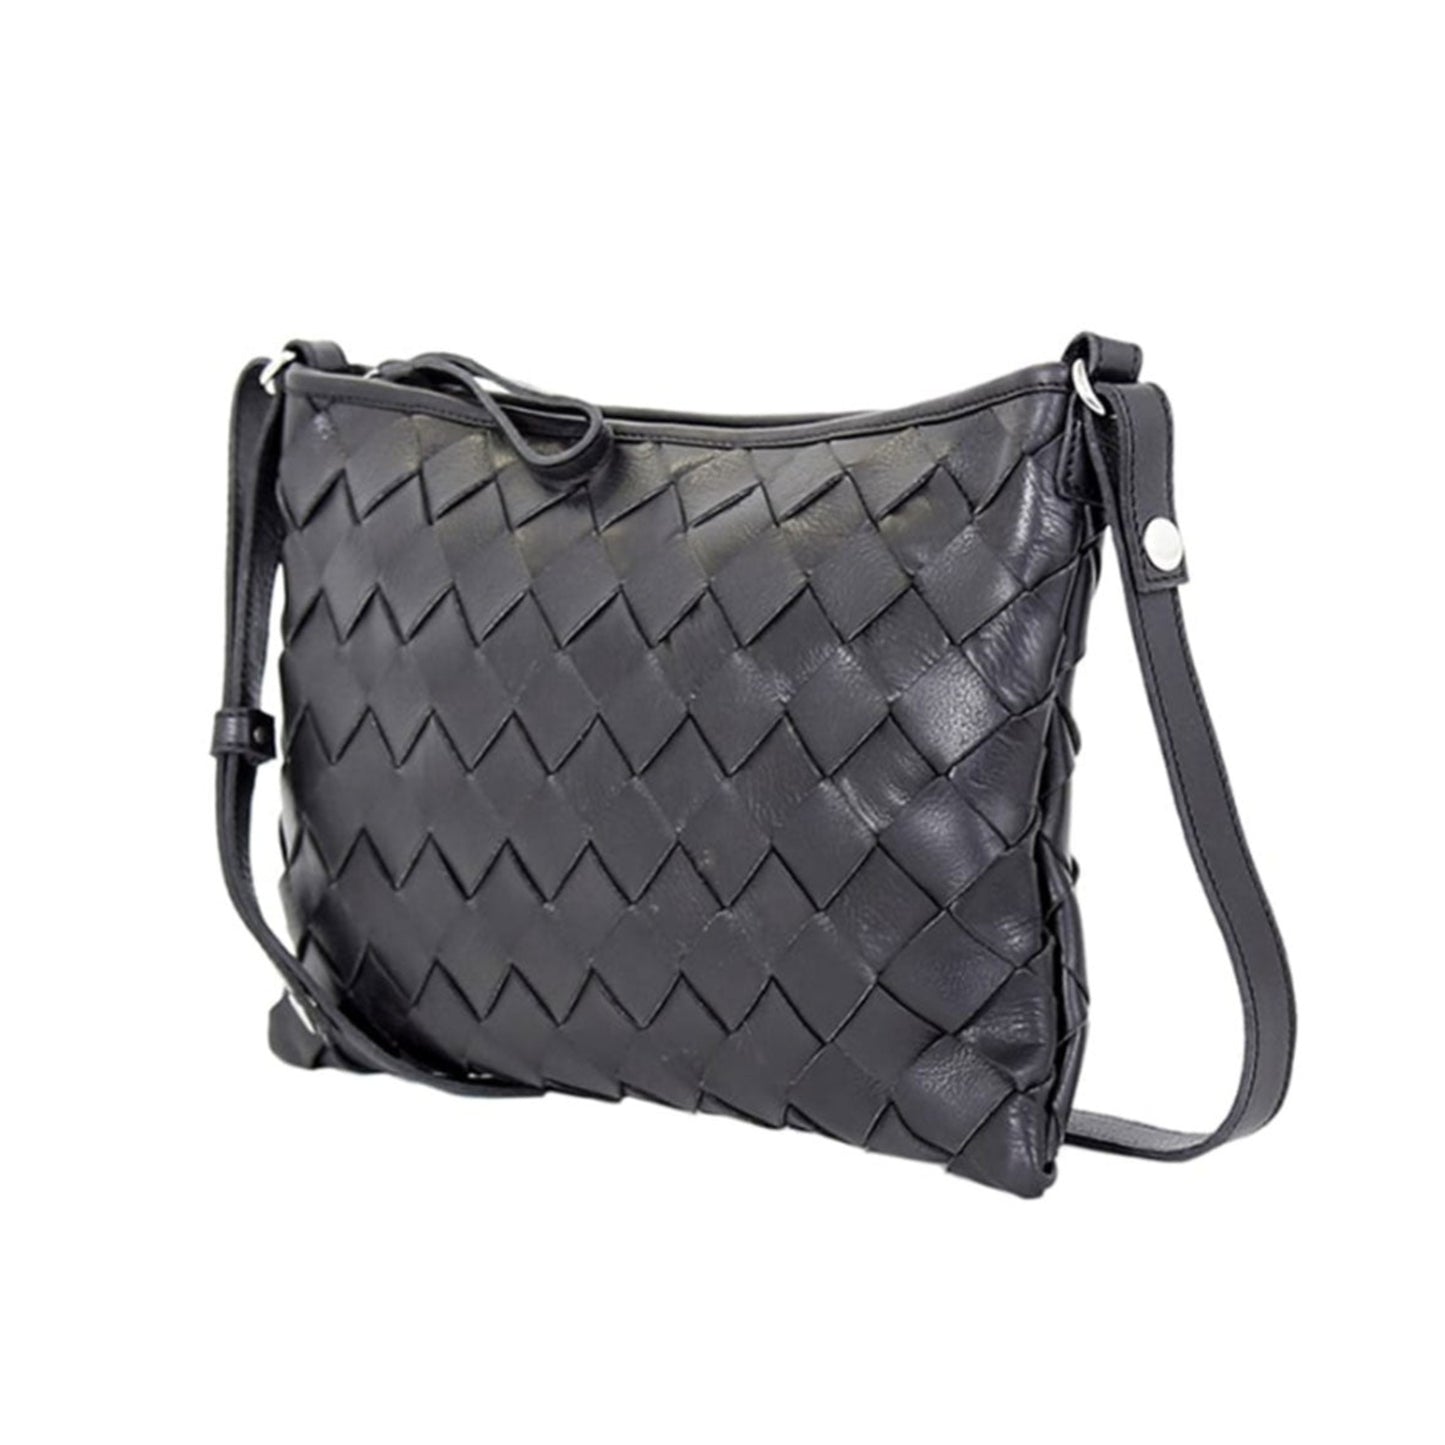 LUMI Trine Woven Leather Bag Large, Black (4389255020609)